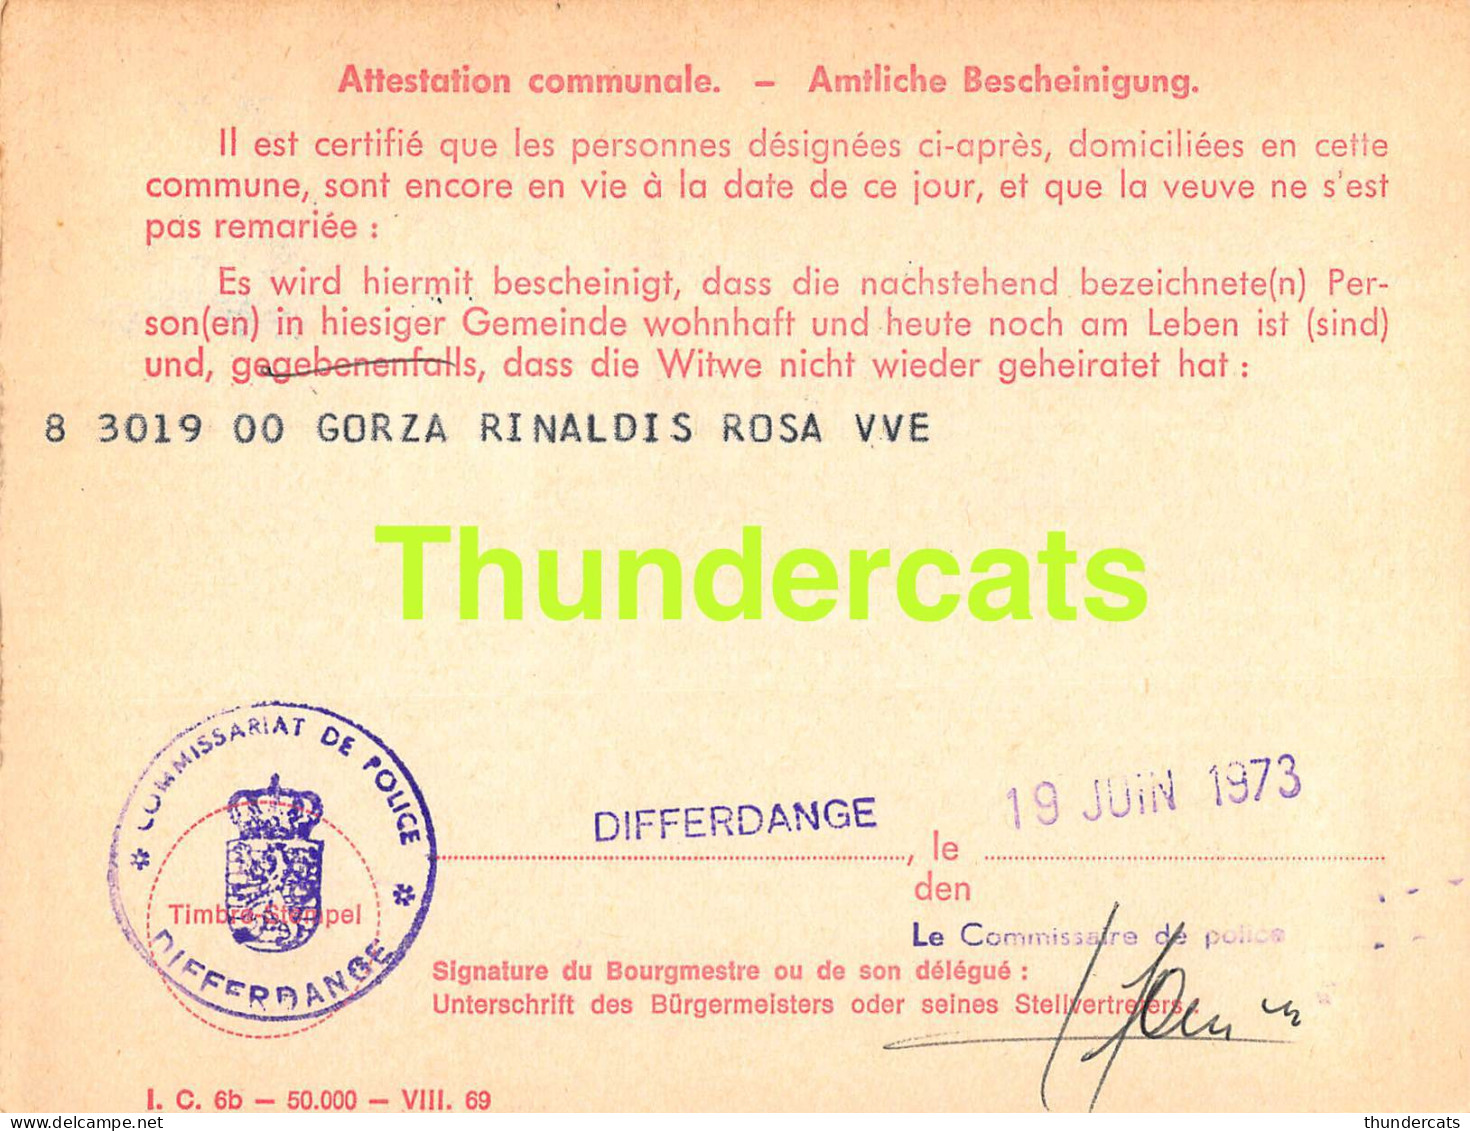 ASSURANCE VIEILLESSE INVALIDITE LUXEMBOURG 1973 GORZA RINALDIS DIFFERDANGE  - Briefe U. Dokumente